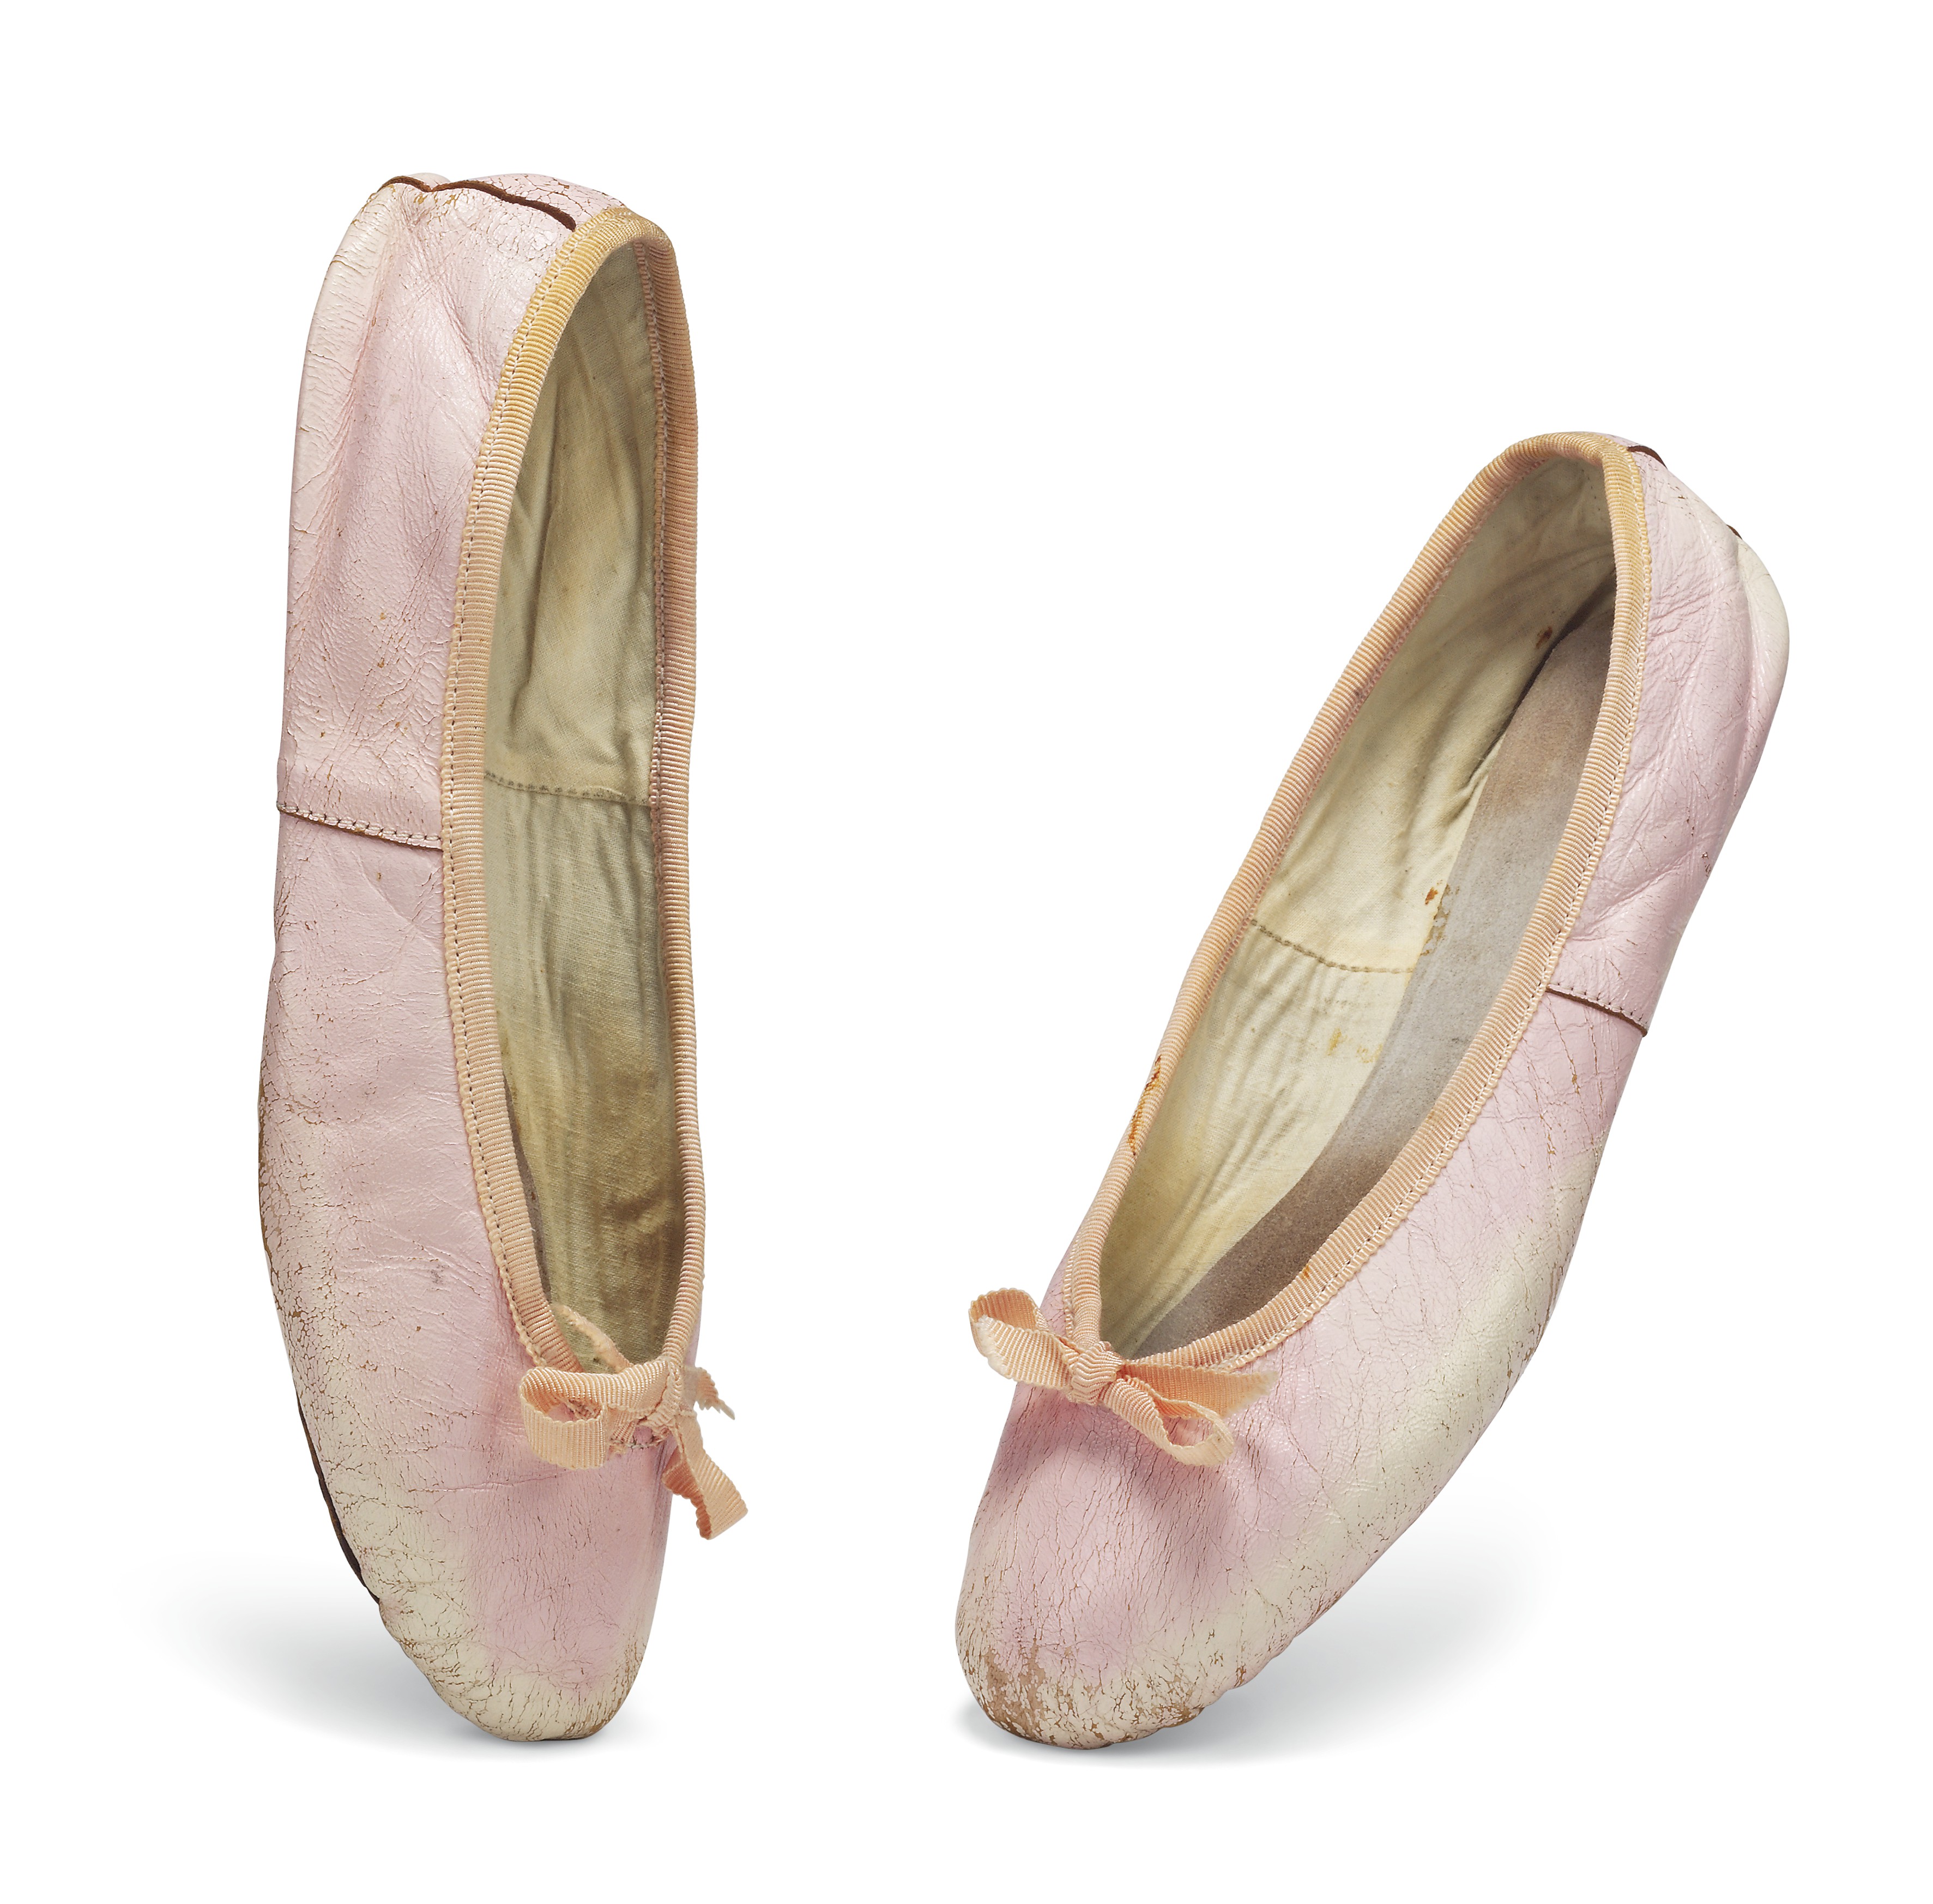 Audrey Hepburn's pair of pale pink leather ballet pumps (Christie's)